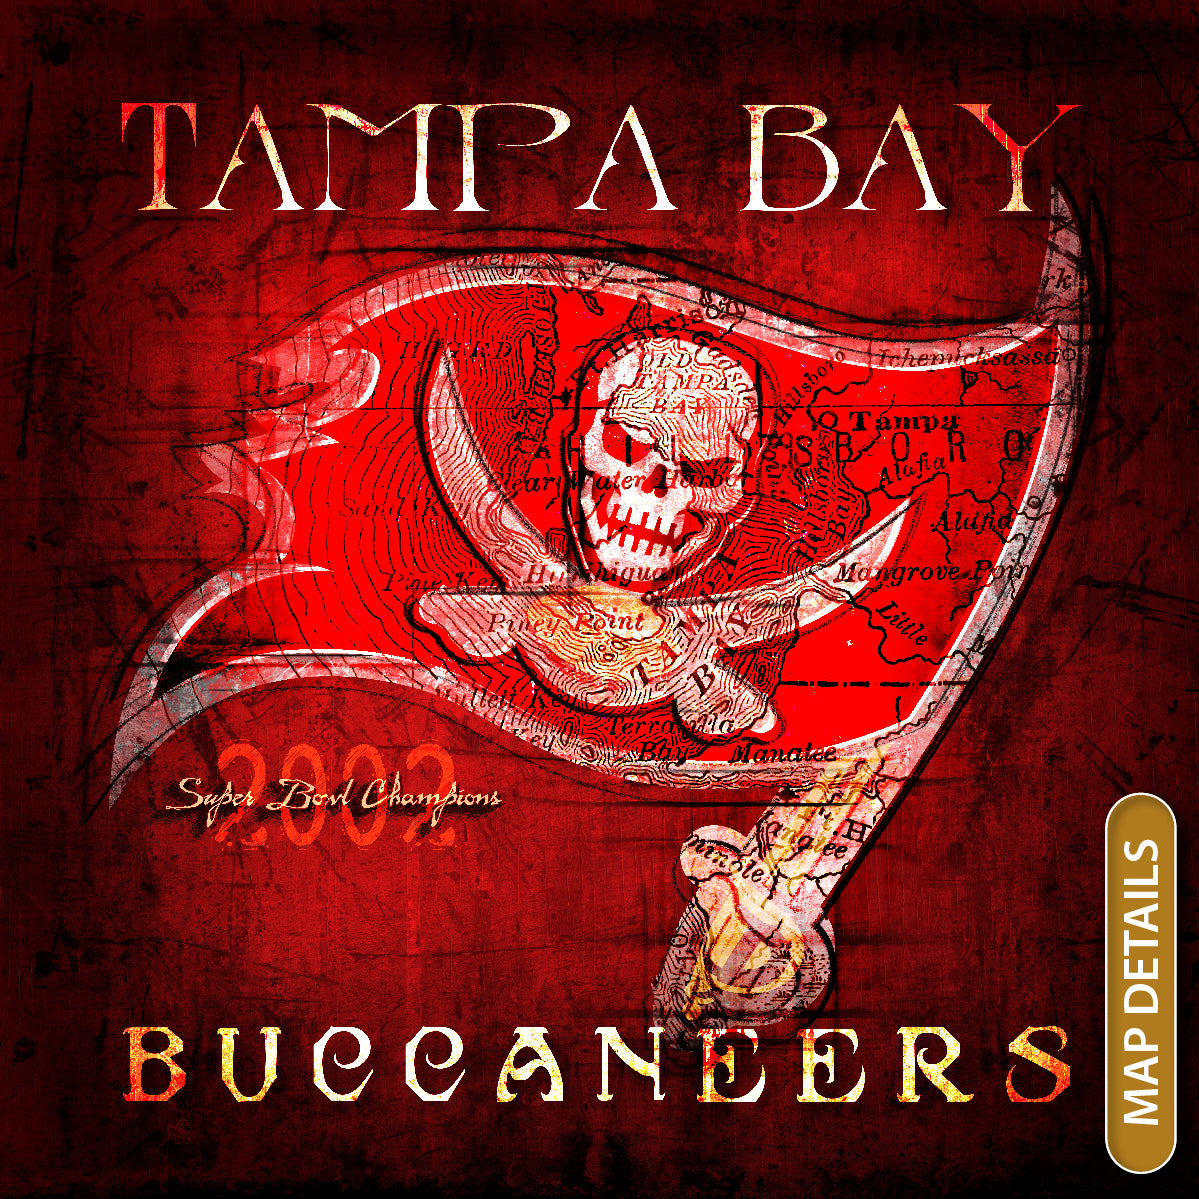 Tampa Bay Buccaneers Vintage Canvas Map